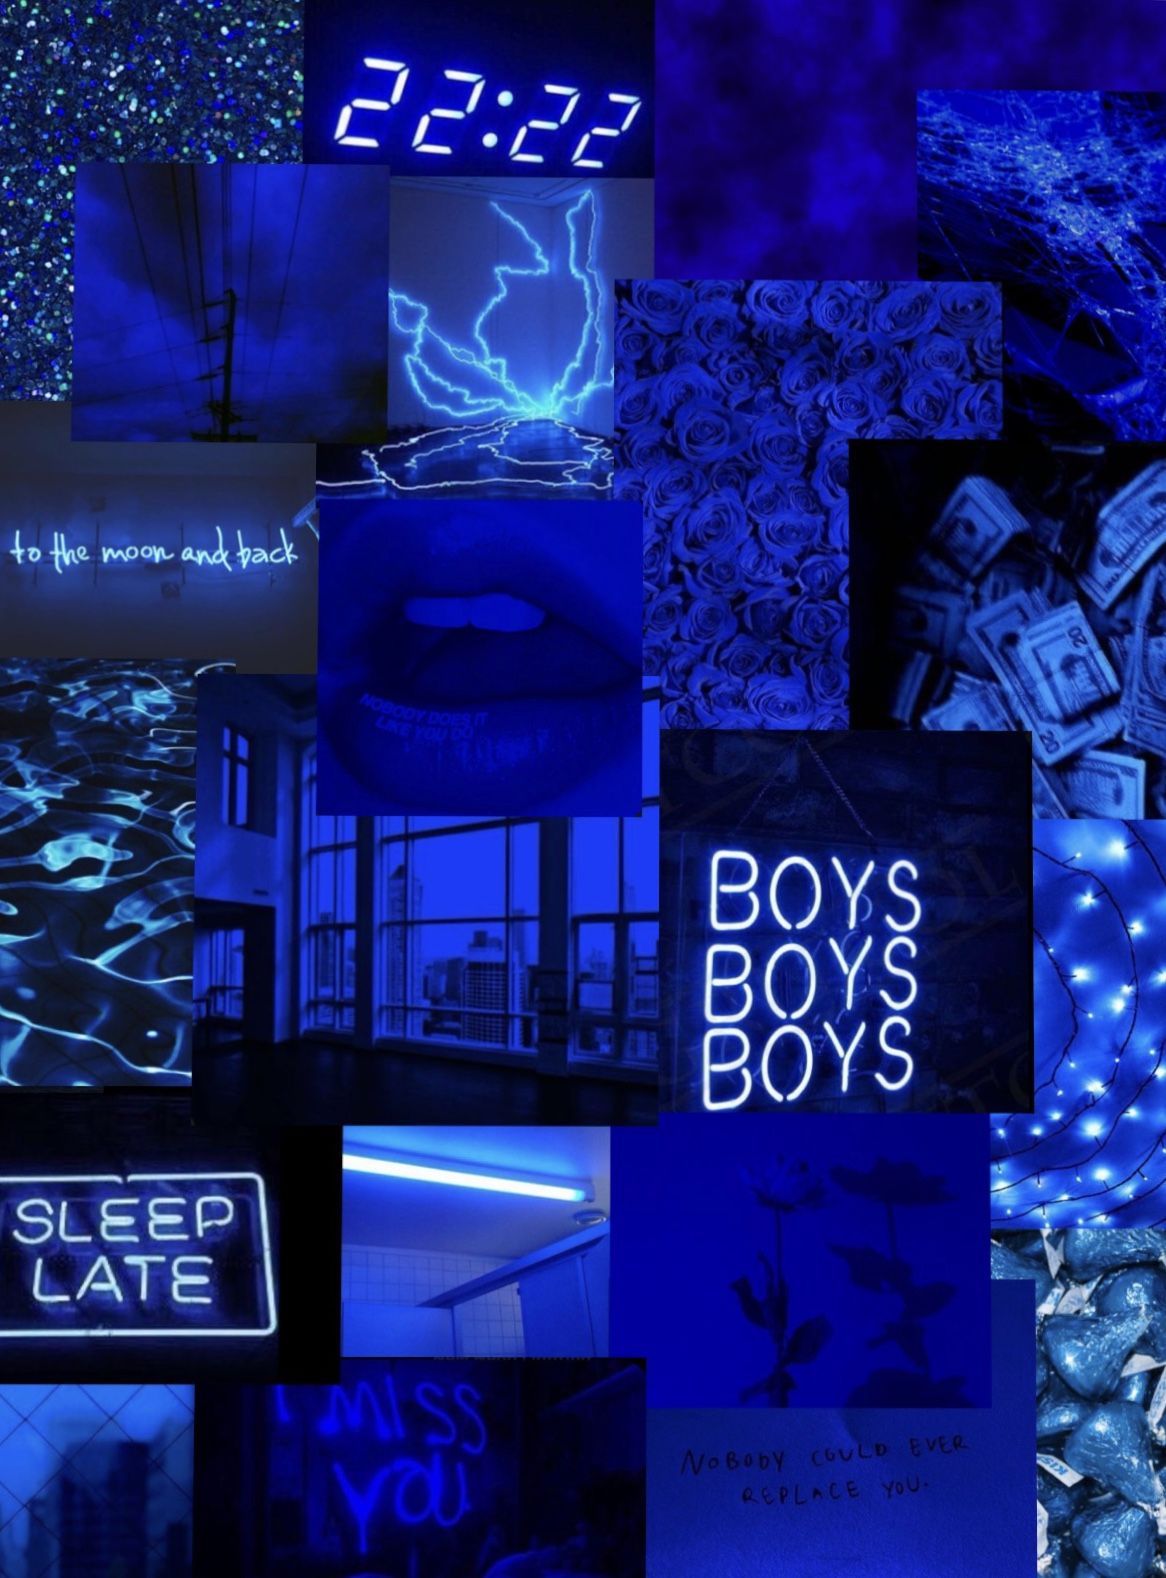 Aesthetic wallpaper blue neon - Navy blue, dark blue